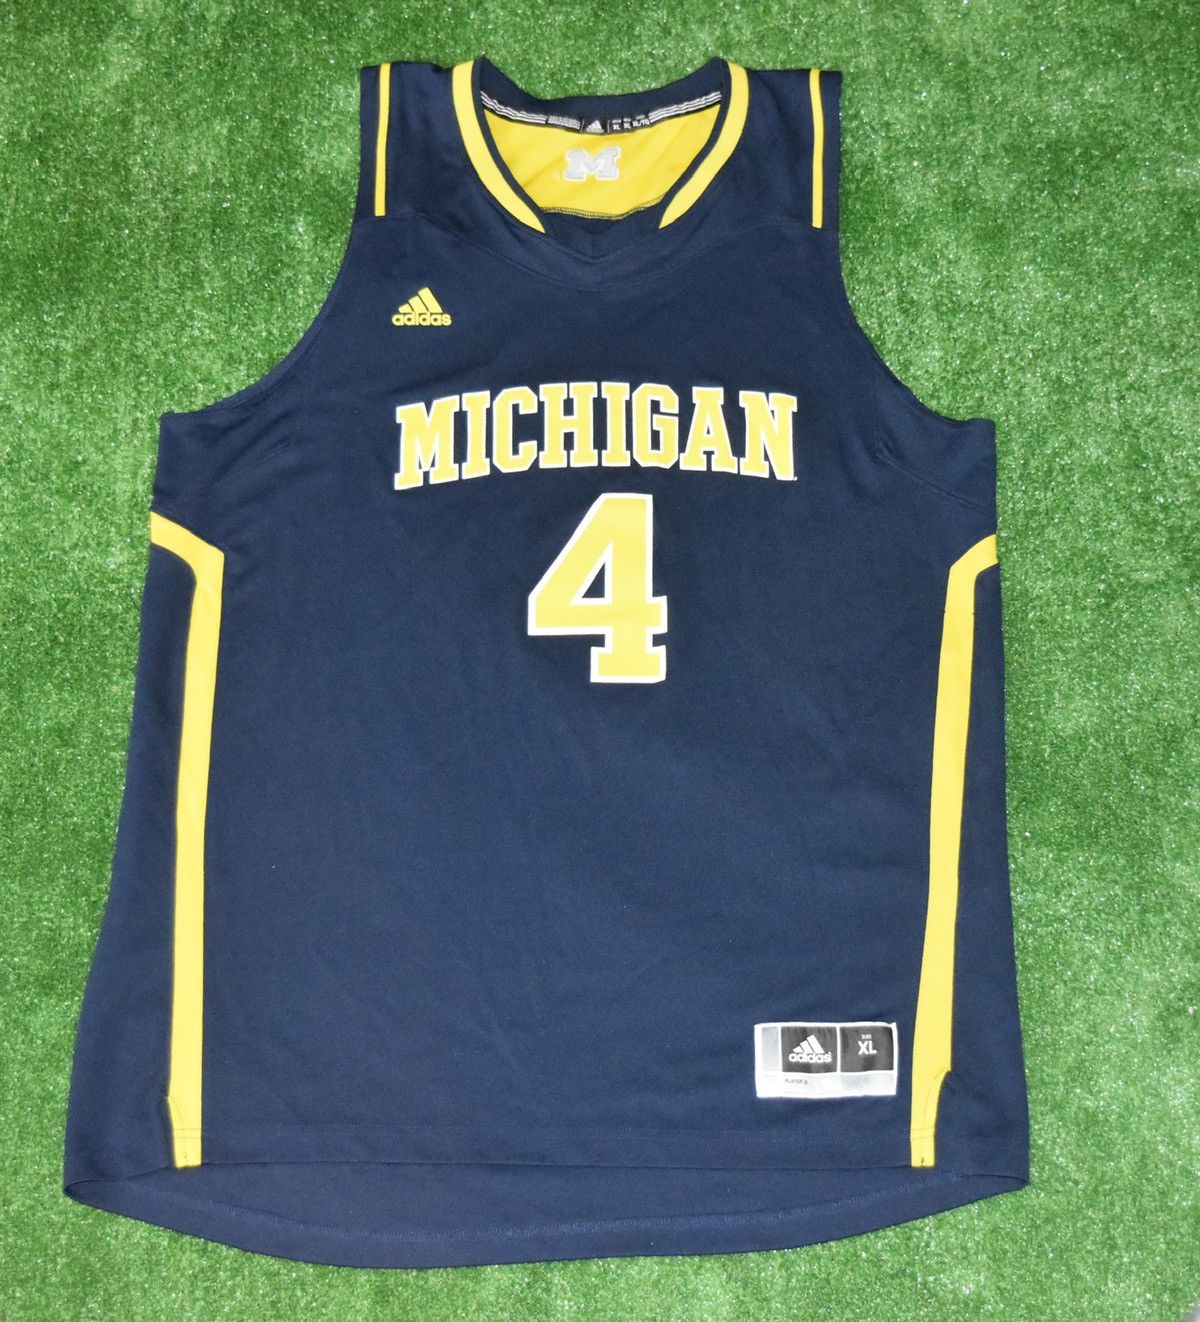 Adidas Chris Webber Michigan Wolverines Basketball NCAA Jersey Size US XL / EU 56 / 4 - 1 Preview